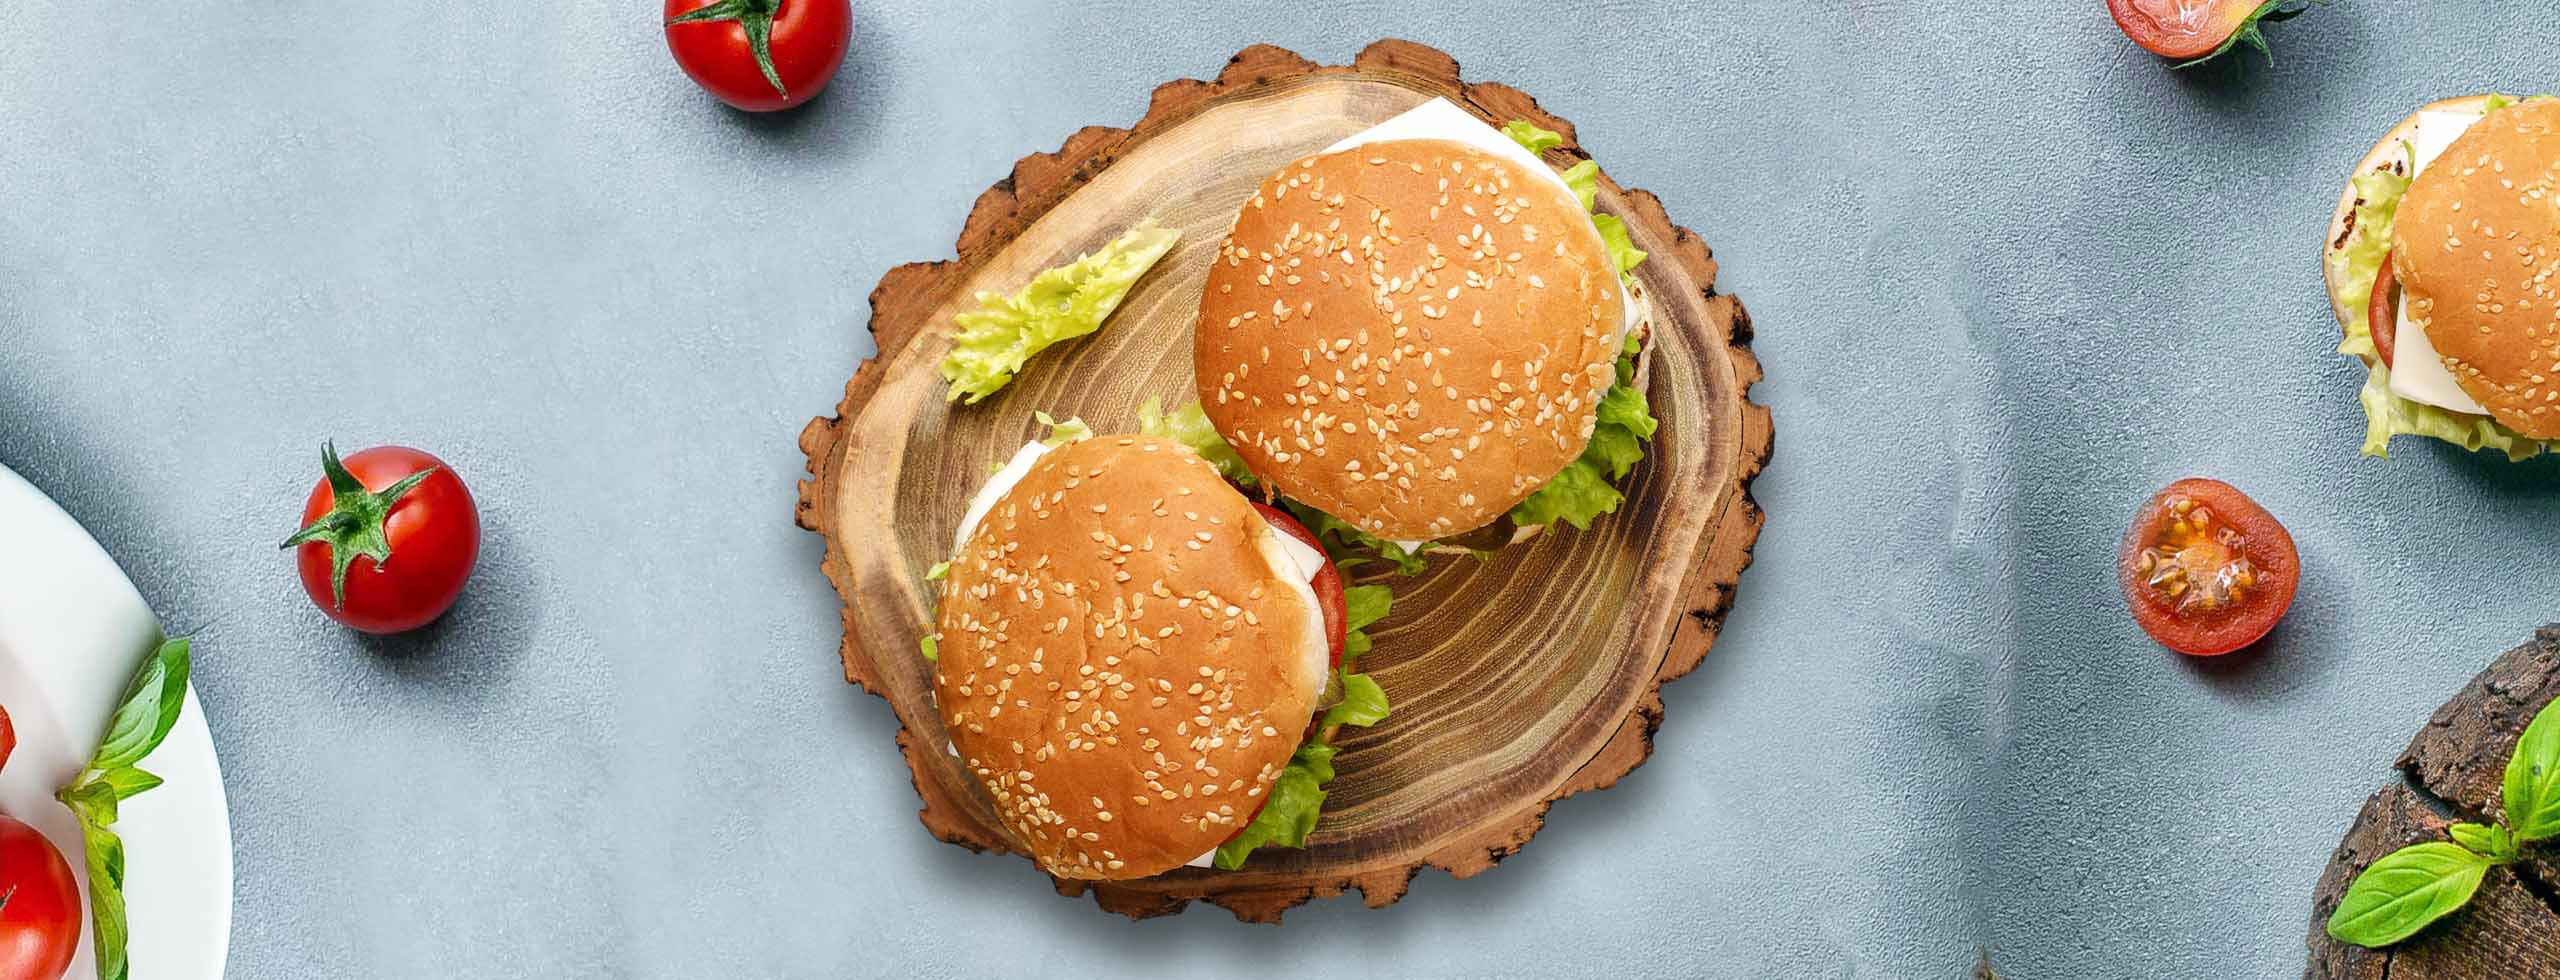 Steak Burger Side Ideas: Veggies & Pastas To Improve Your Steak Dinner